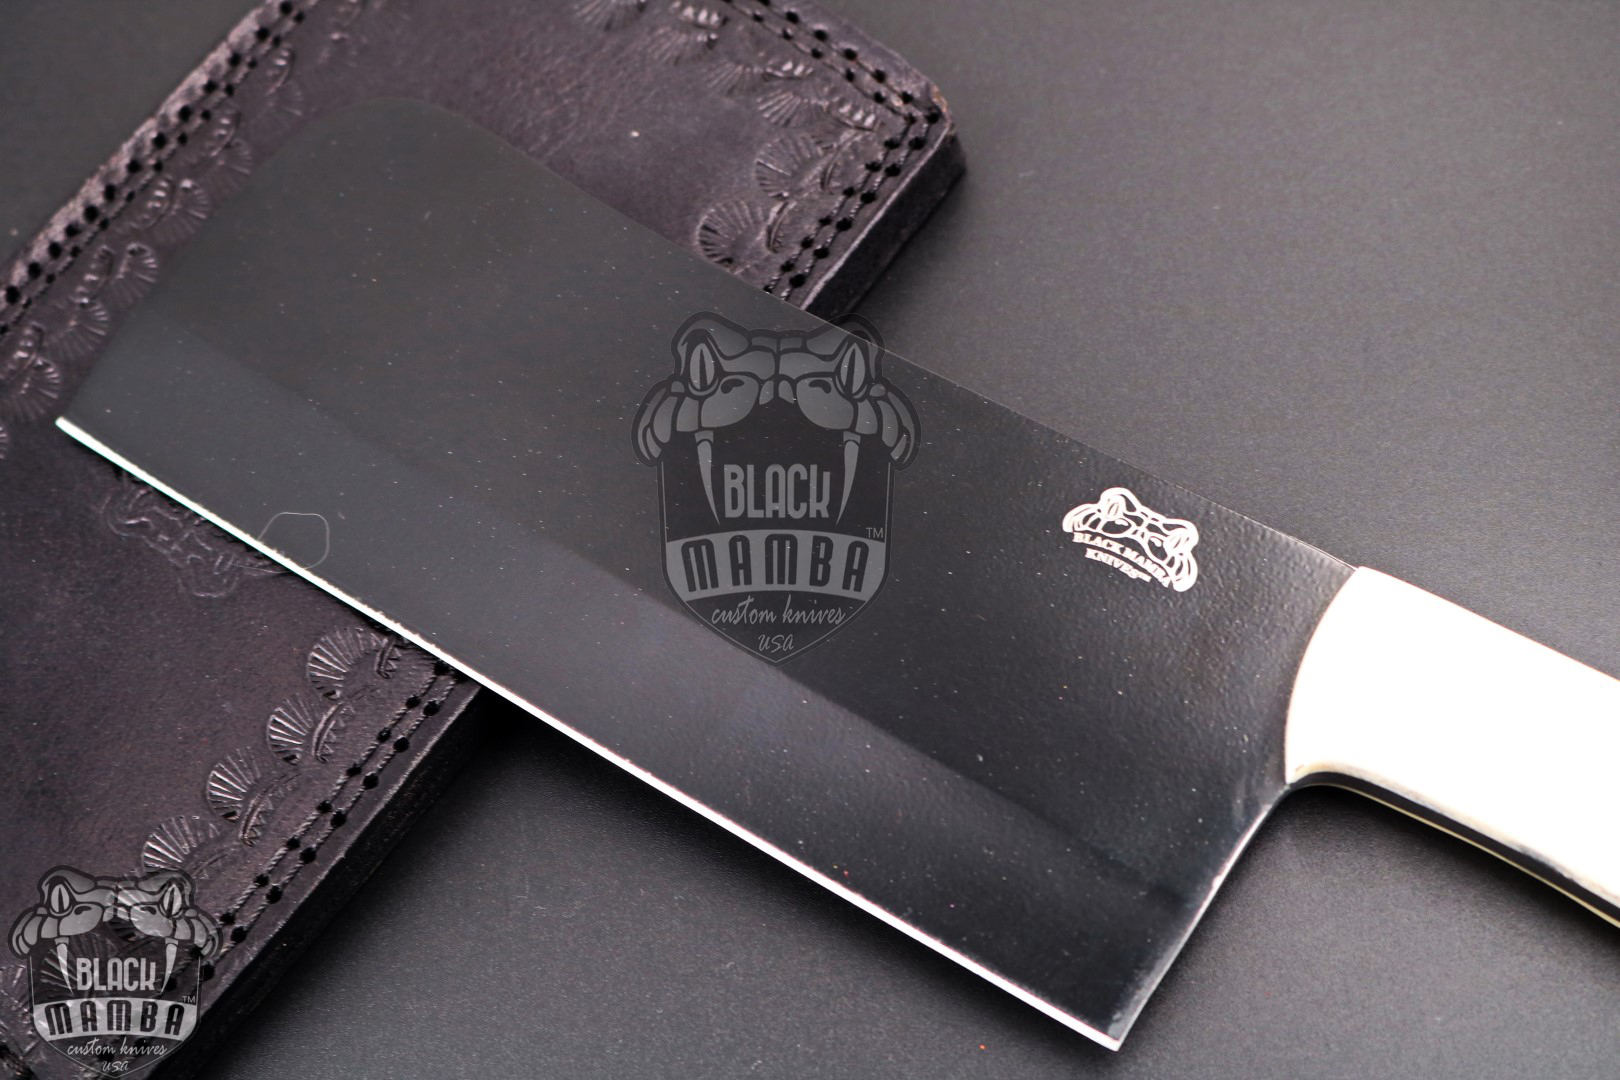 Bmk-704 Panda 440c Stainless Steel Cleaver Chef Cleaver Blade Knife